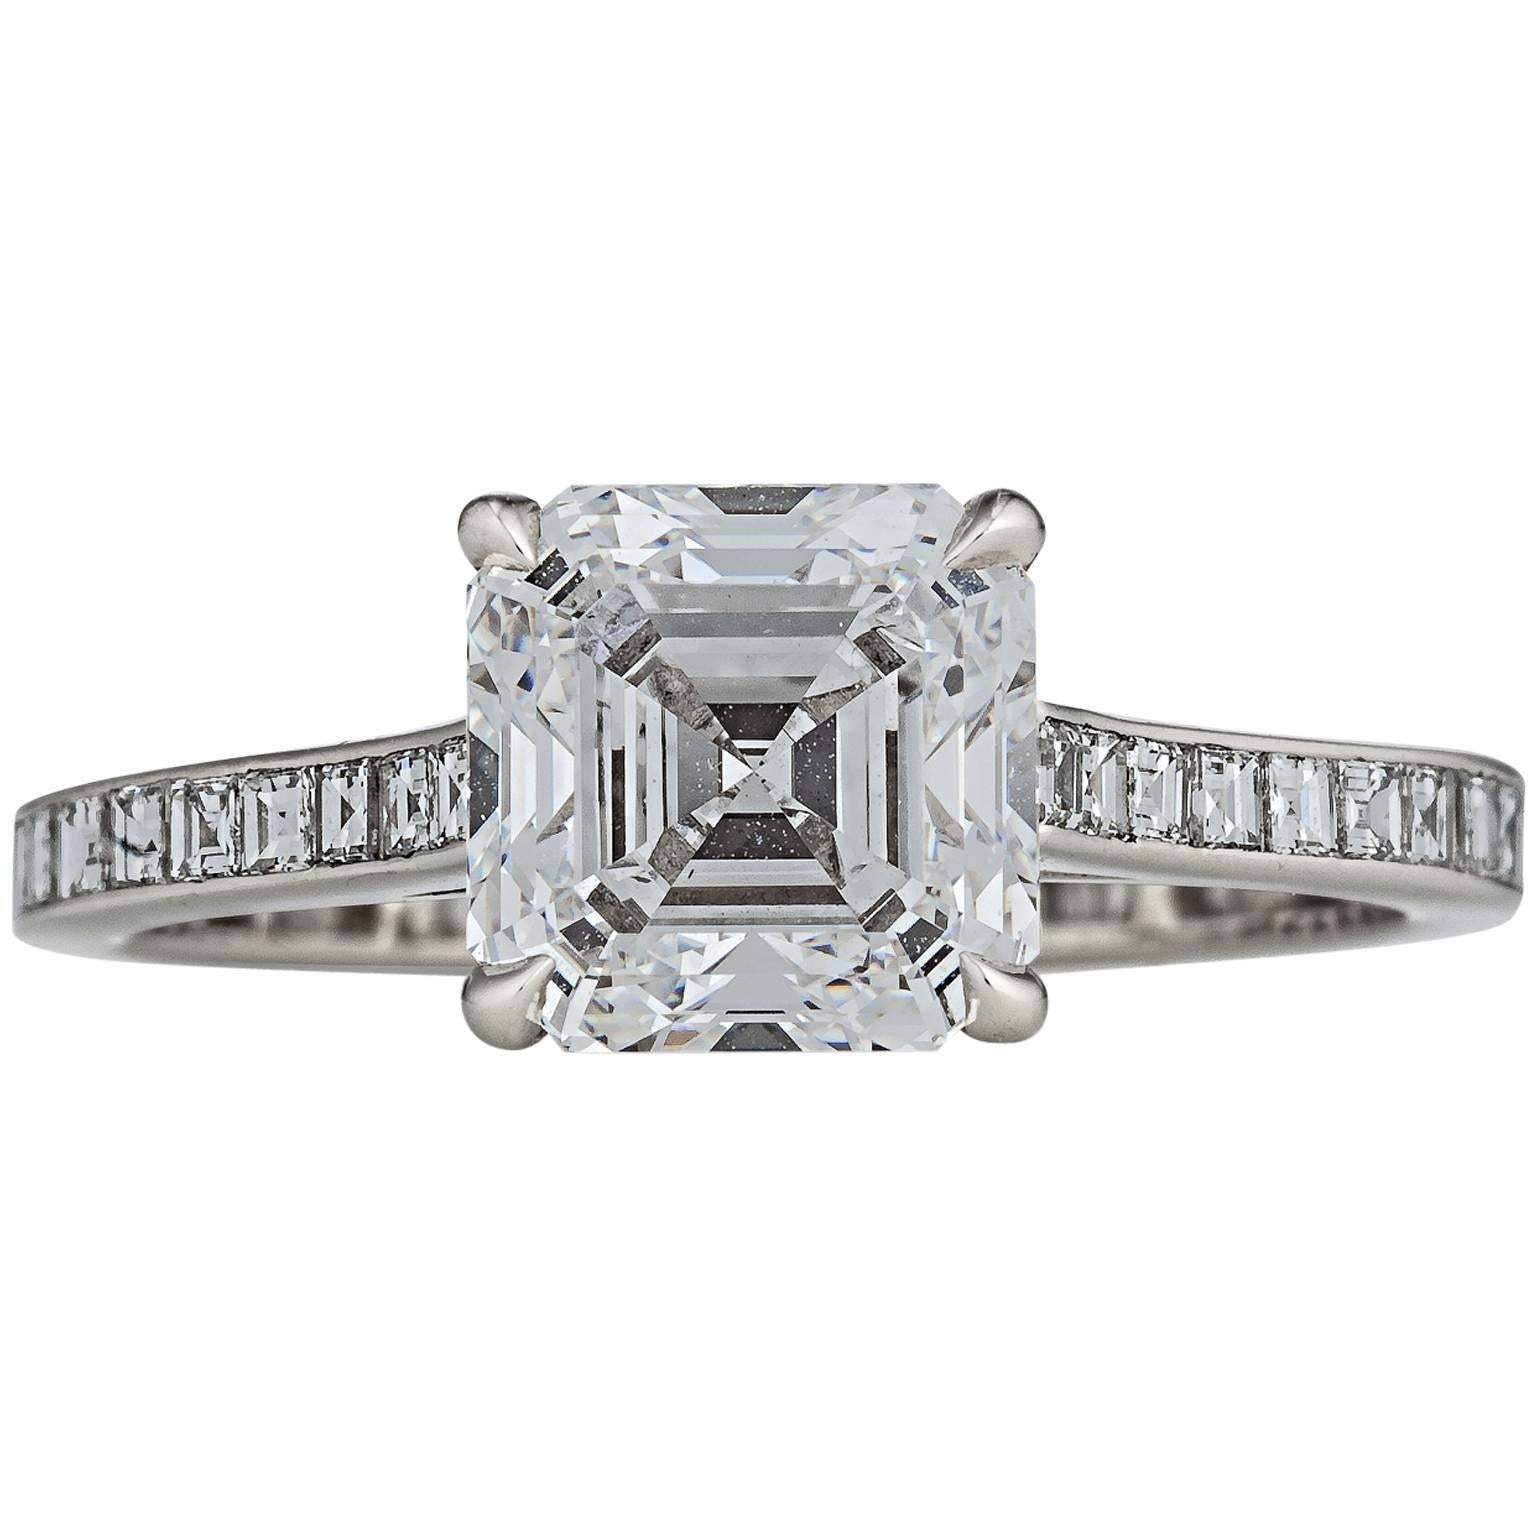  2.11 Carat Square Asscher Cut Diamond Platinum Engagement Ring